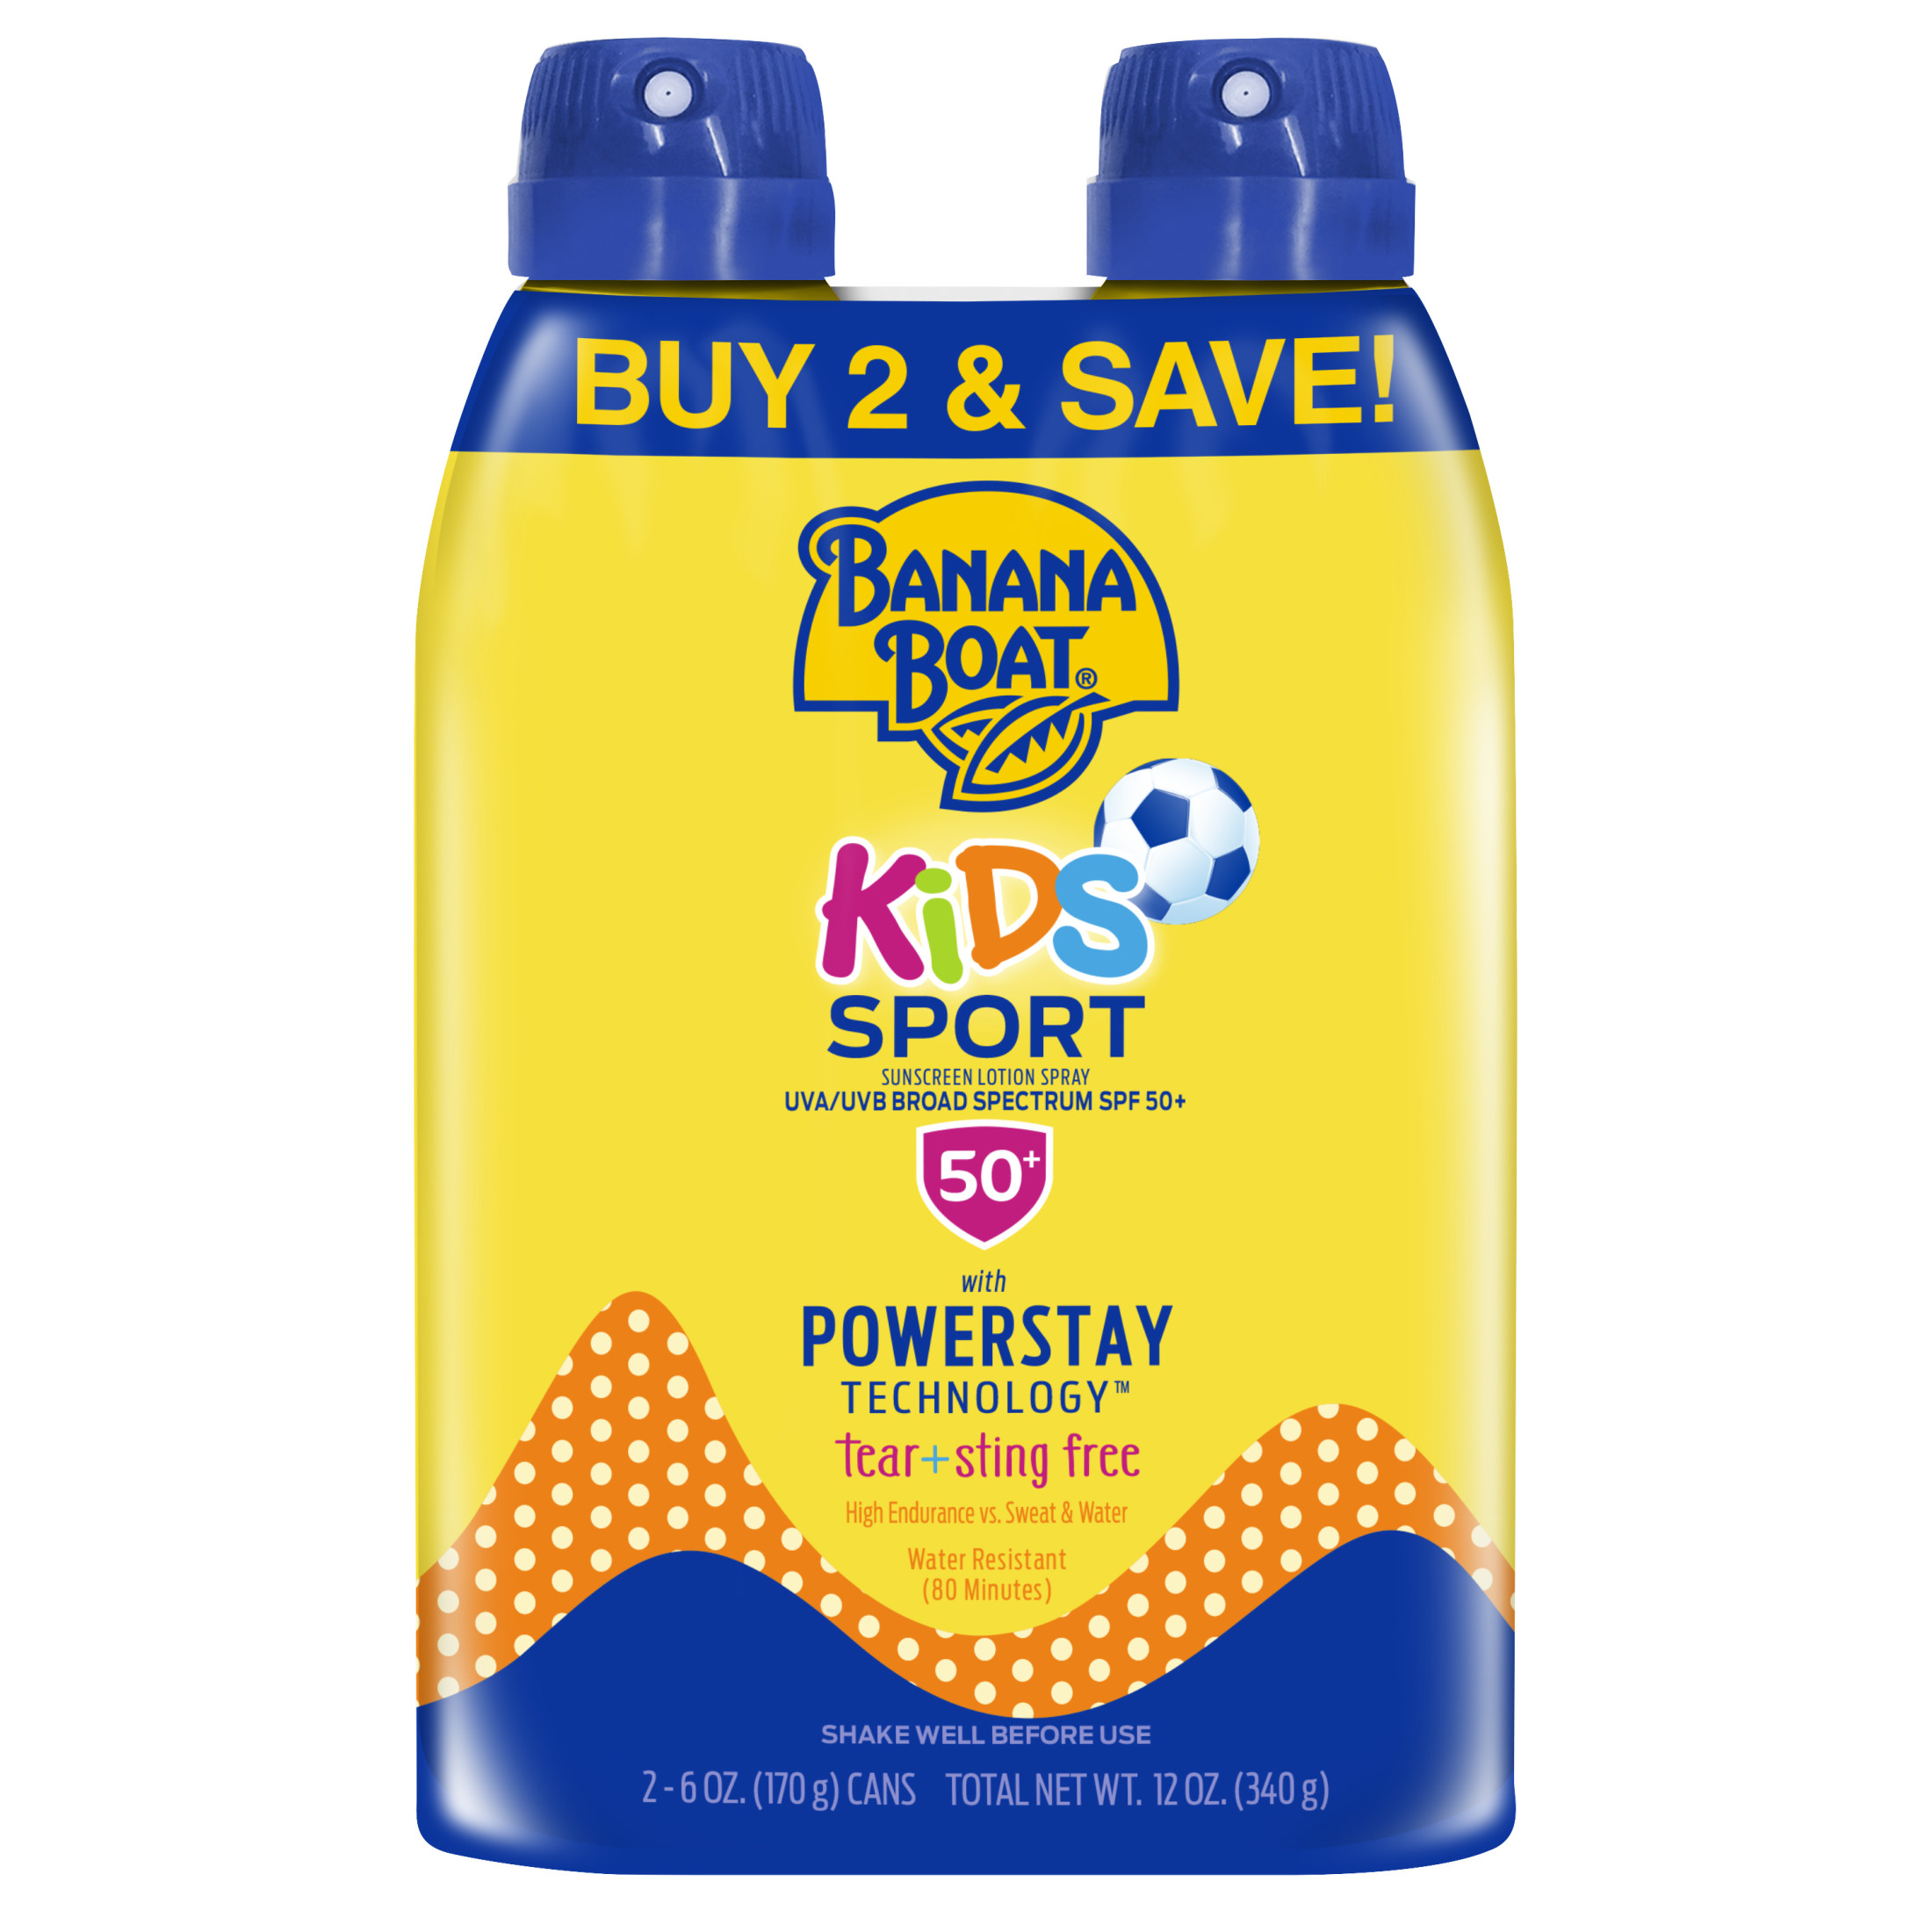 Banana Boat Kids Sport Sunscreen Spray SPF 50, 6oz each Twin Pack - image 3 of 11